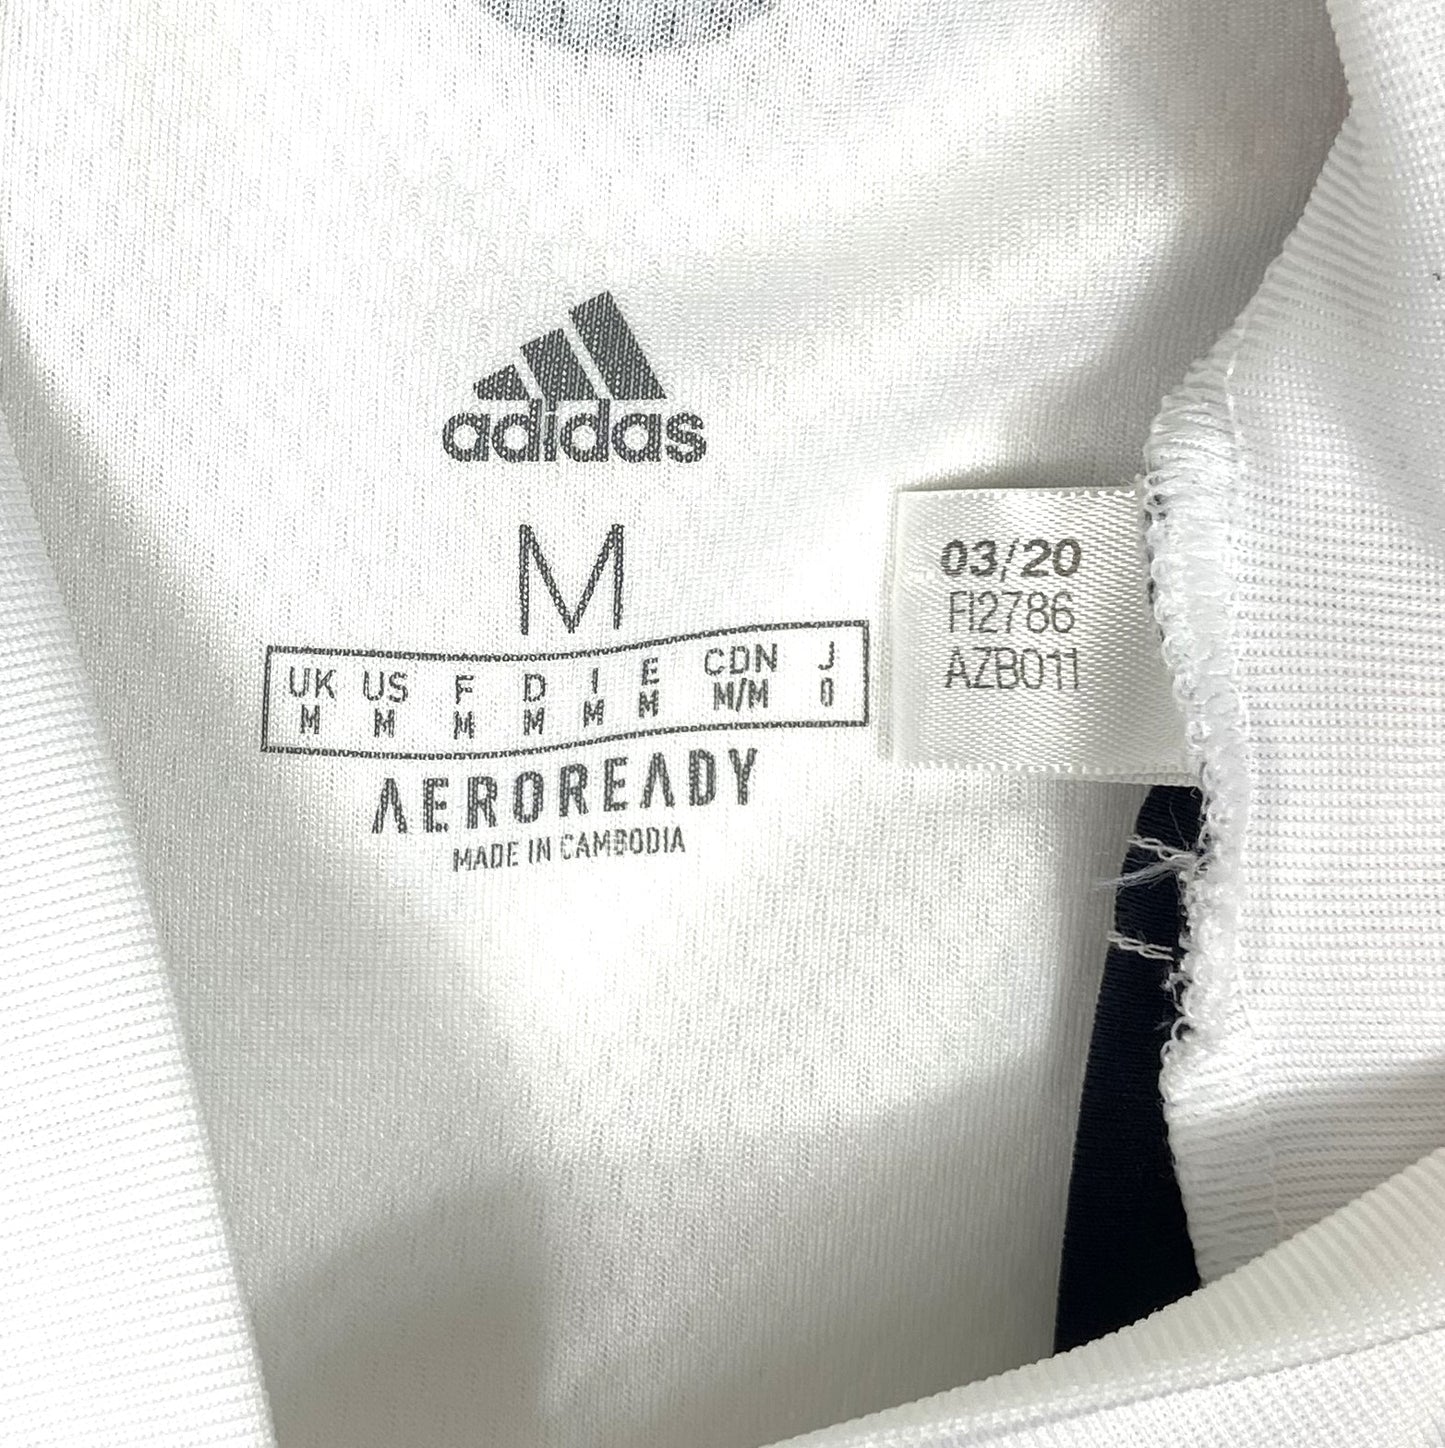 2020 2021 Fulham Adidas Home Football Shirt Men's Medium